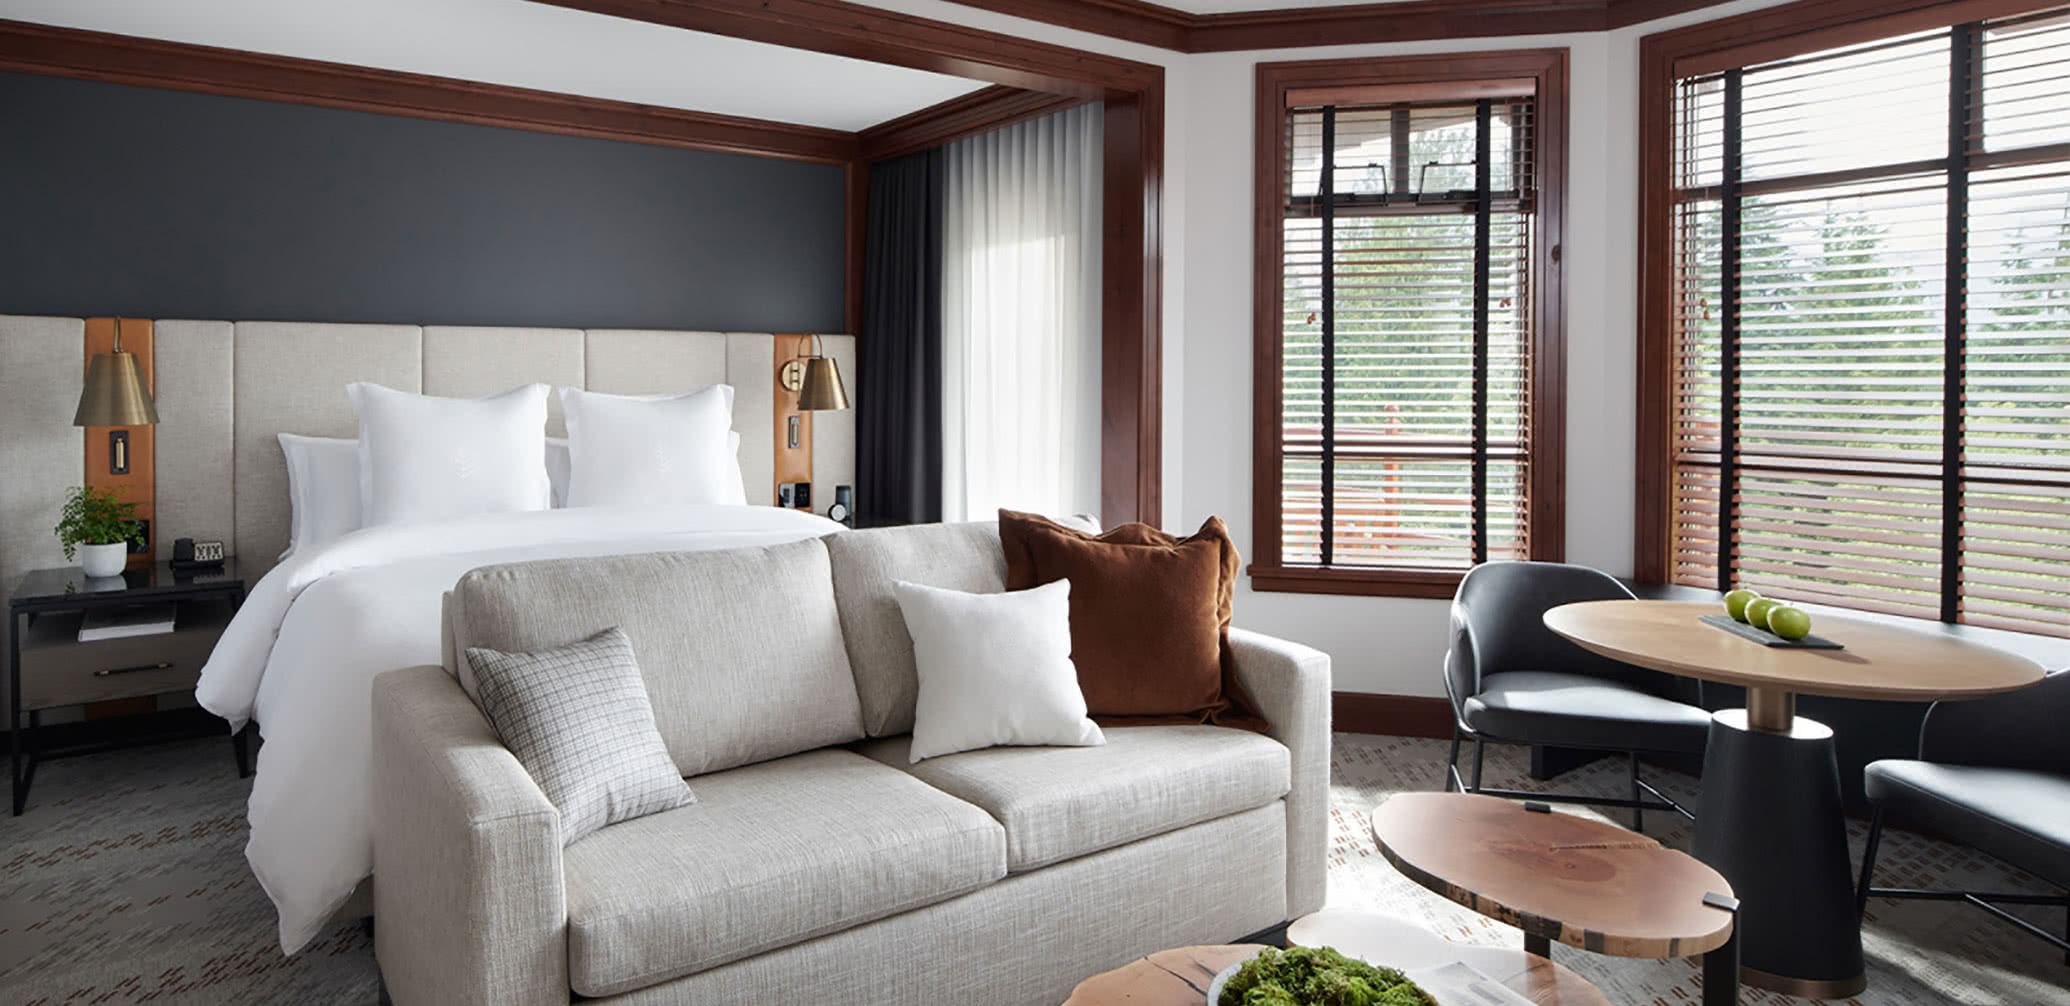 Best Luxury Hotel In Whistler: Four Seasons Vs Fairmont Chateau Whistler